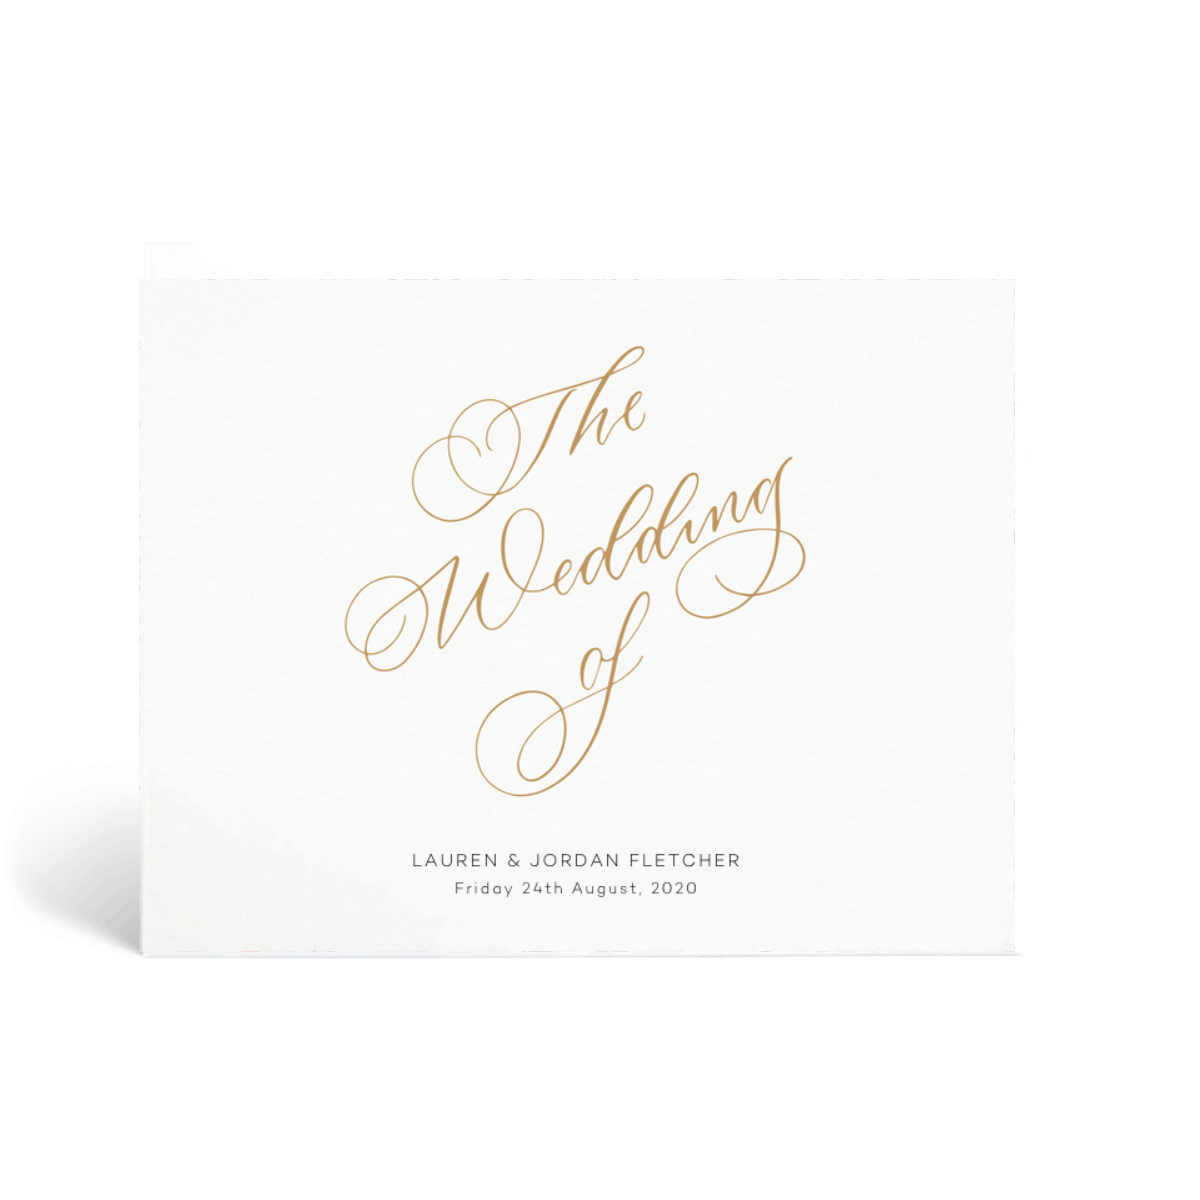 The Wedding Of